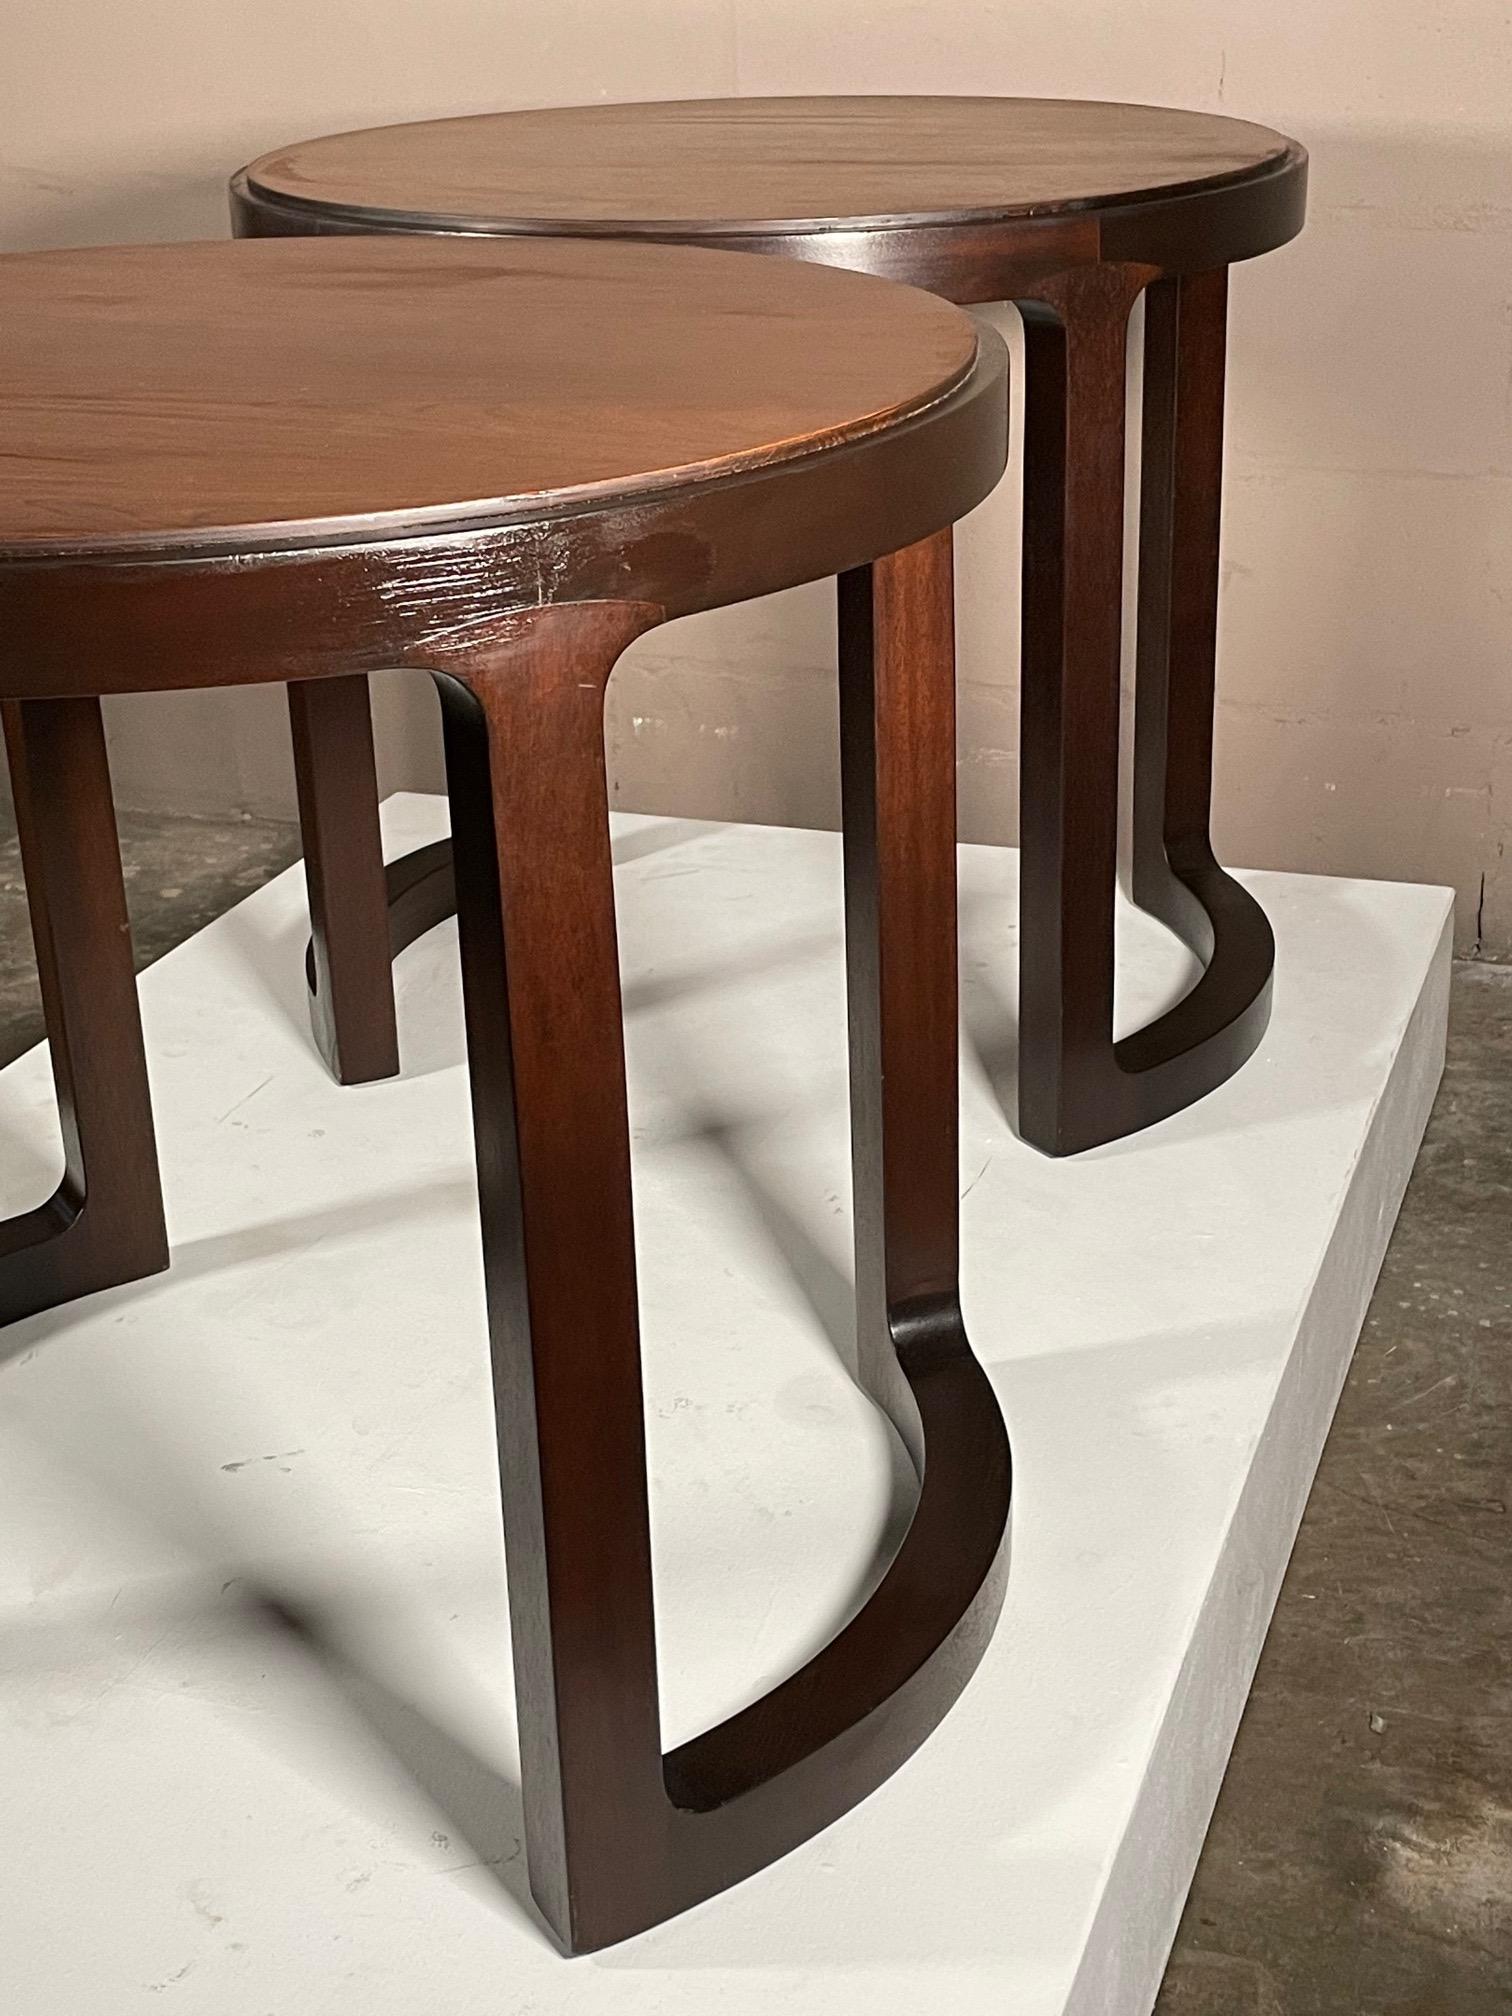 Pair of Unusual Side Tables by Dunbar 1